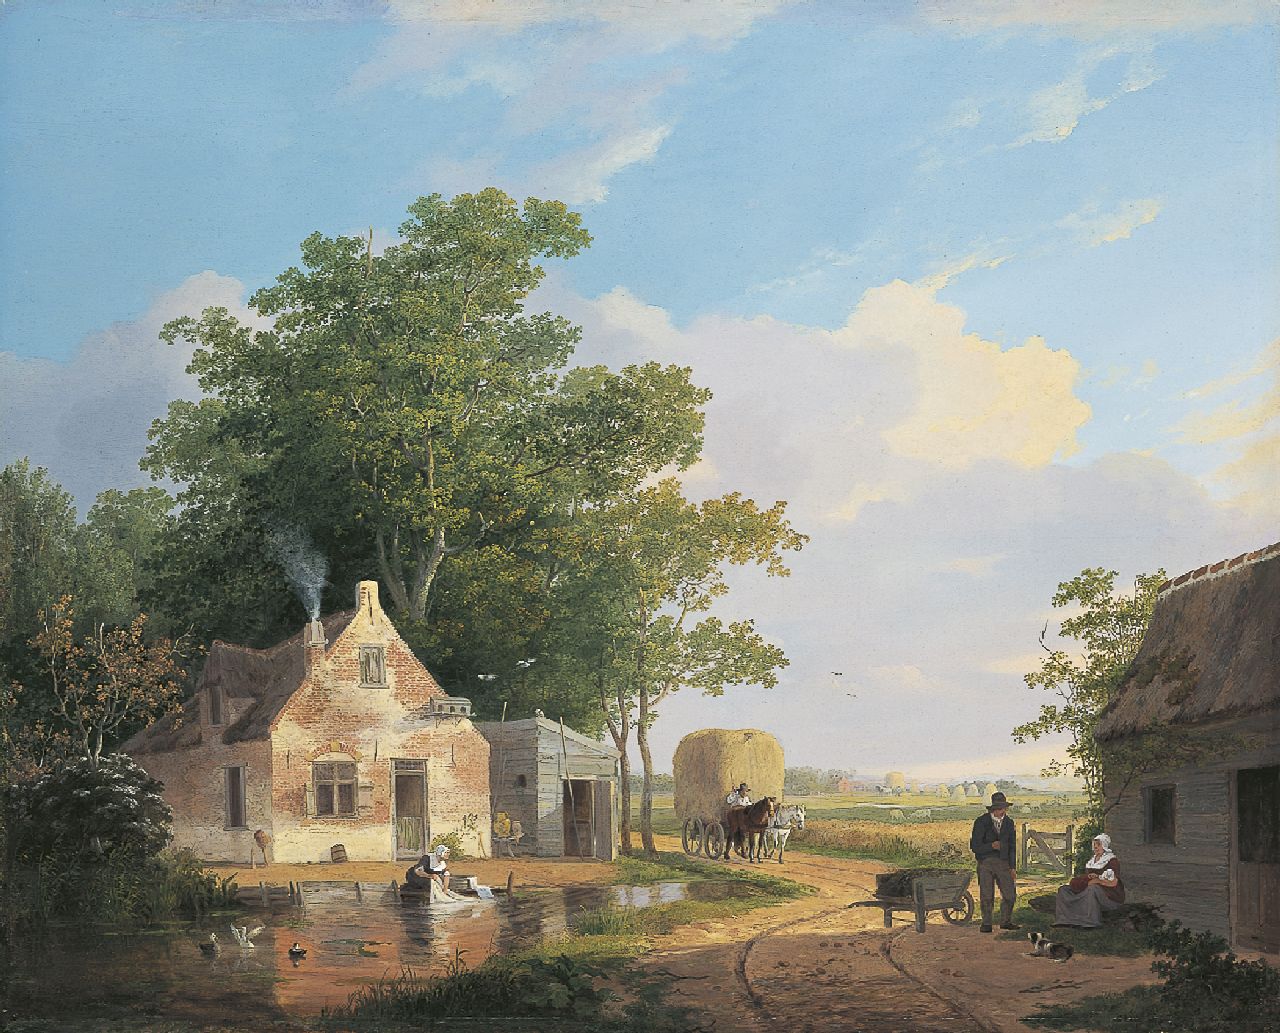 Stok J. van der | Jacobus van der Stok, Idyllic country side, Öl auf Holz 56,5 x 70,0 cm, signed r.c.